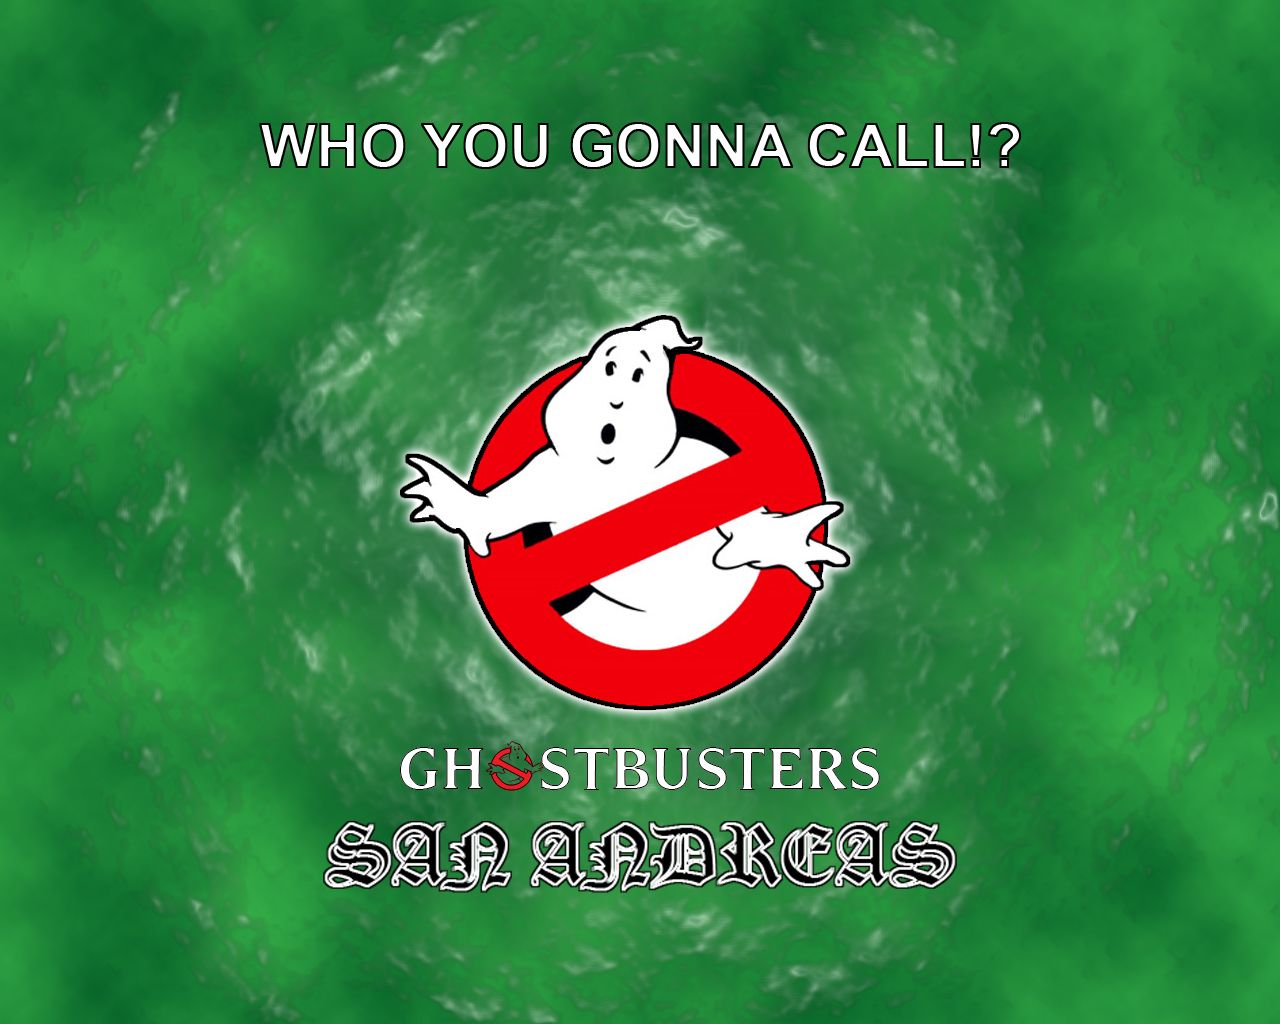 Gta Ghostbusters Wallpaper 01 Image Mod Db